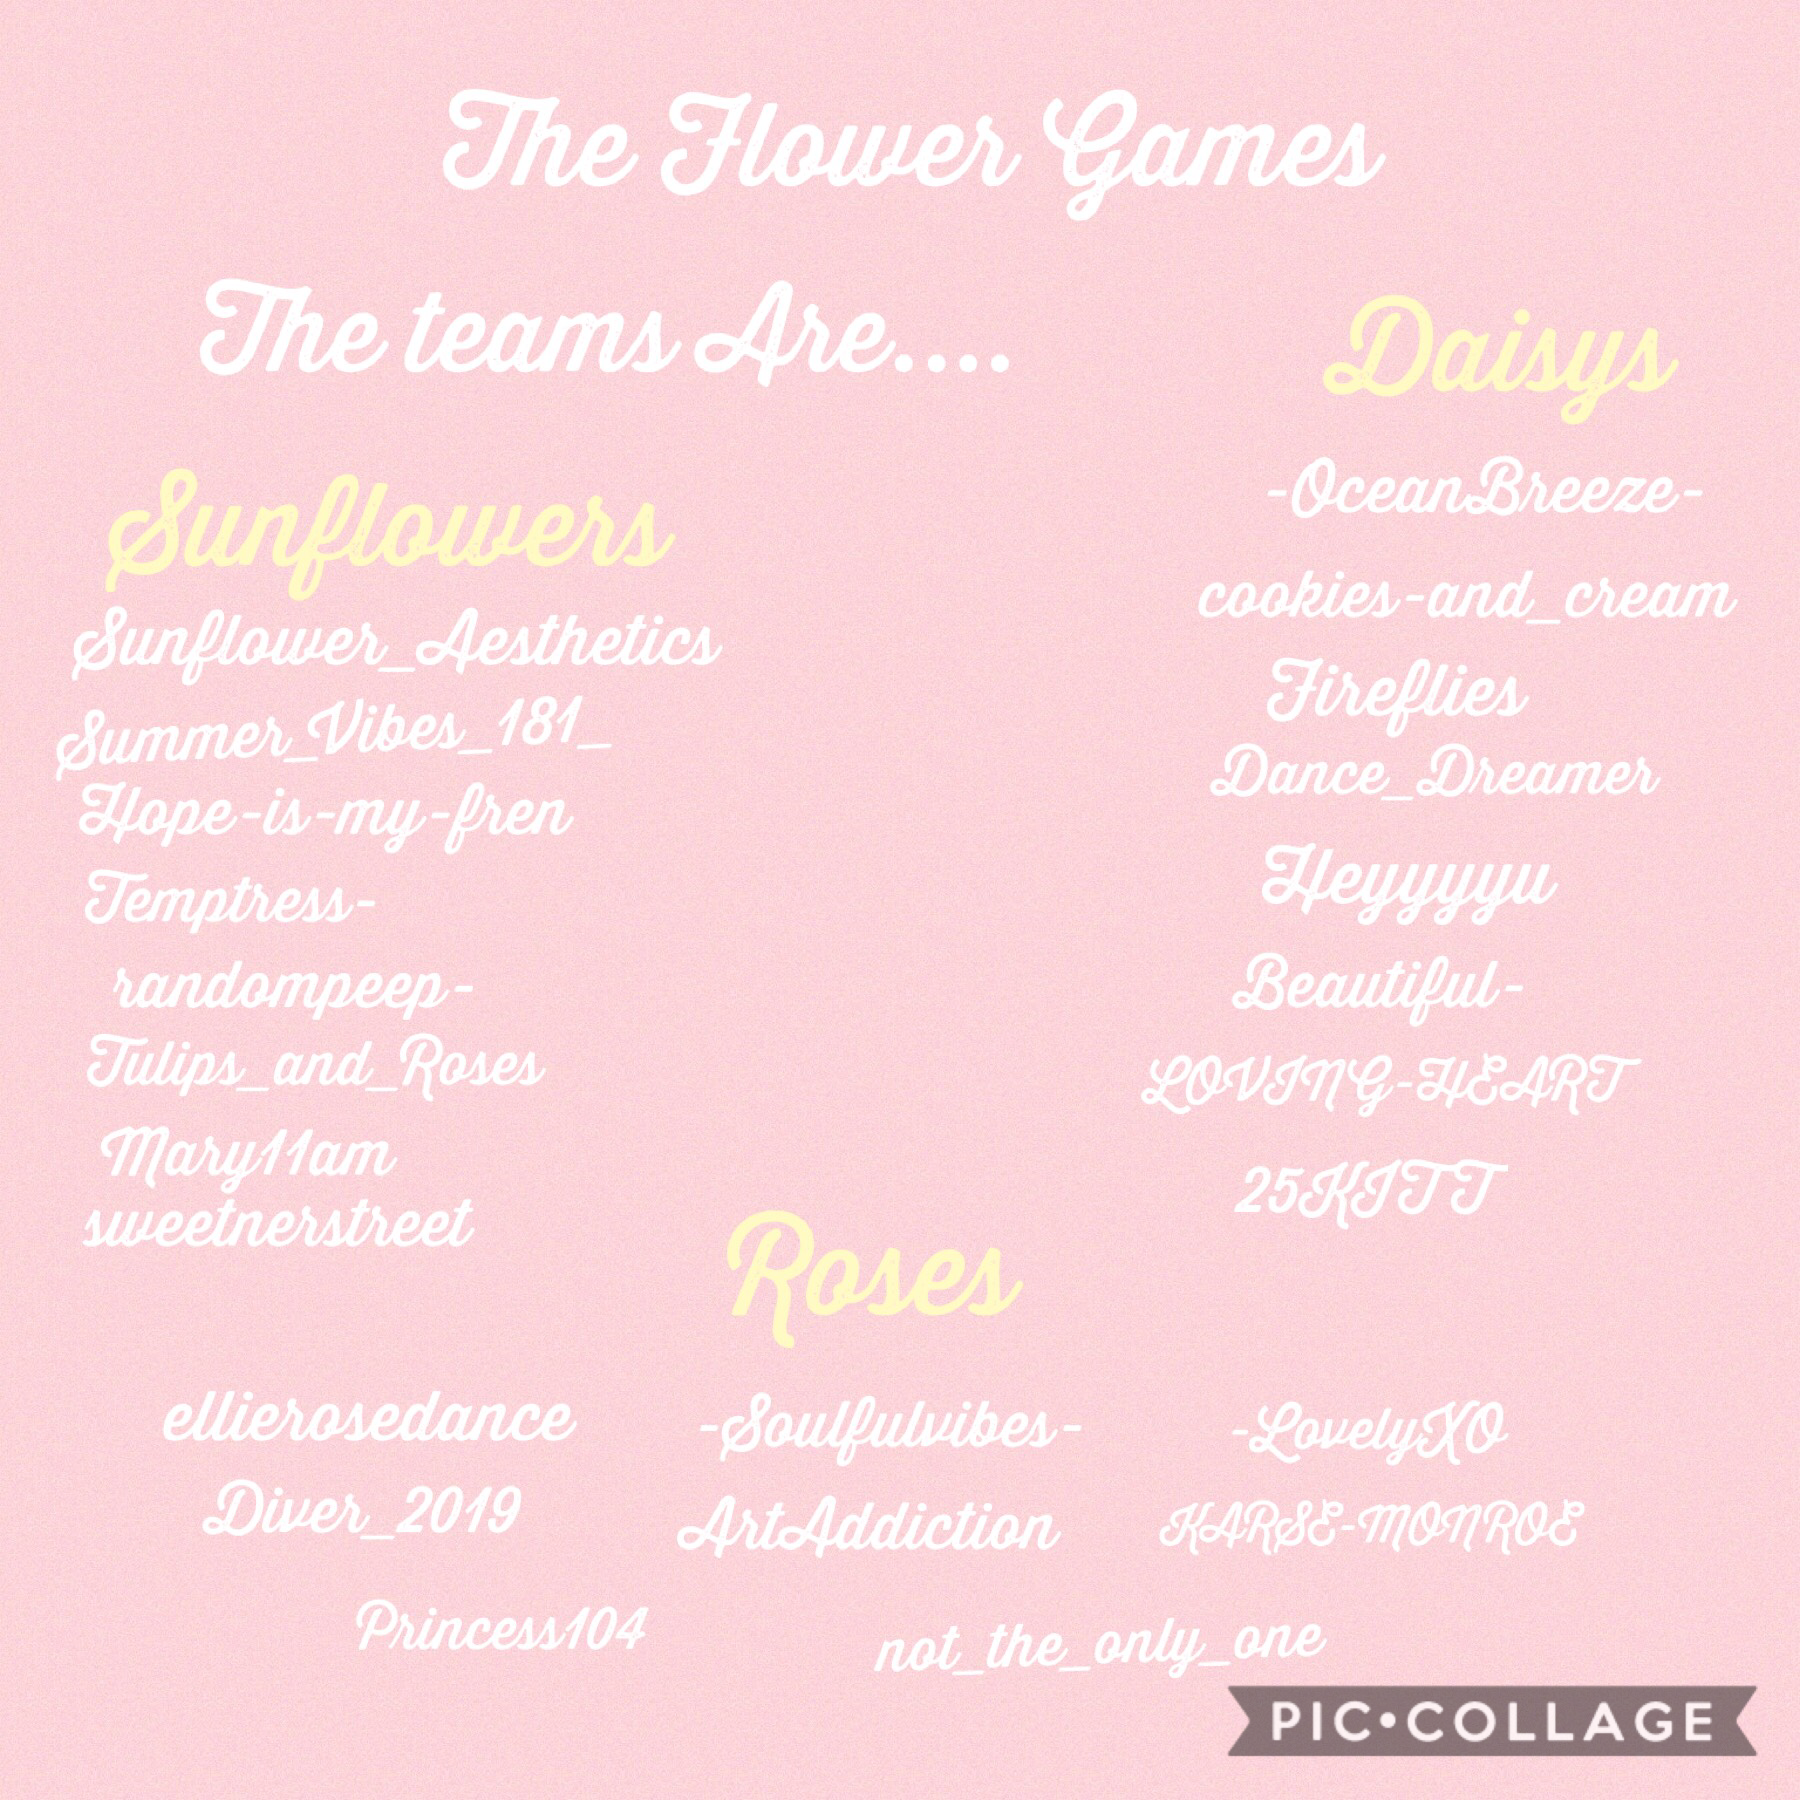 The flower games teams😁